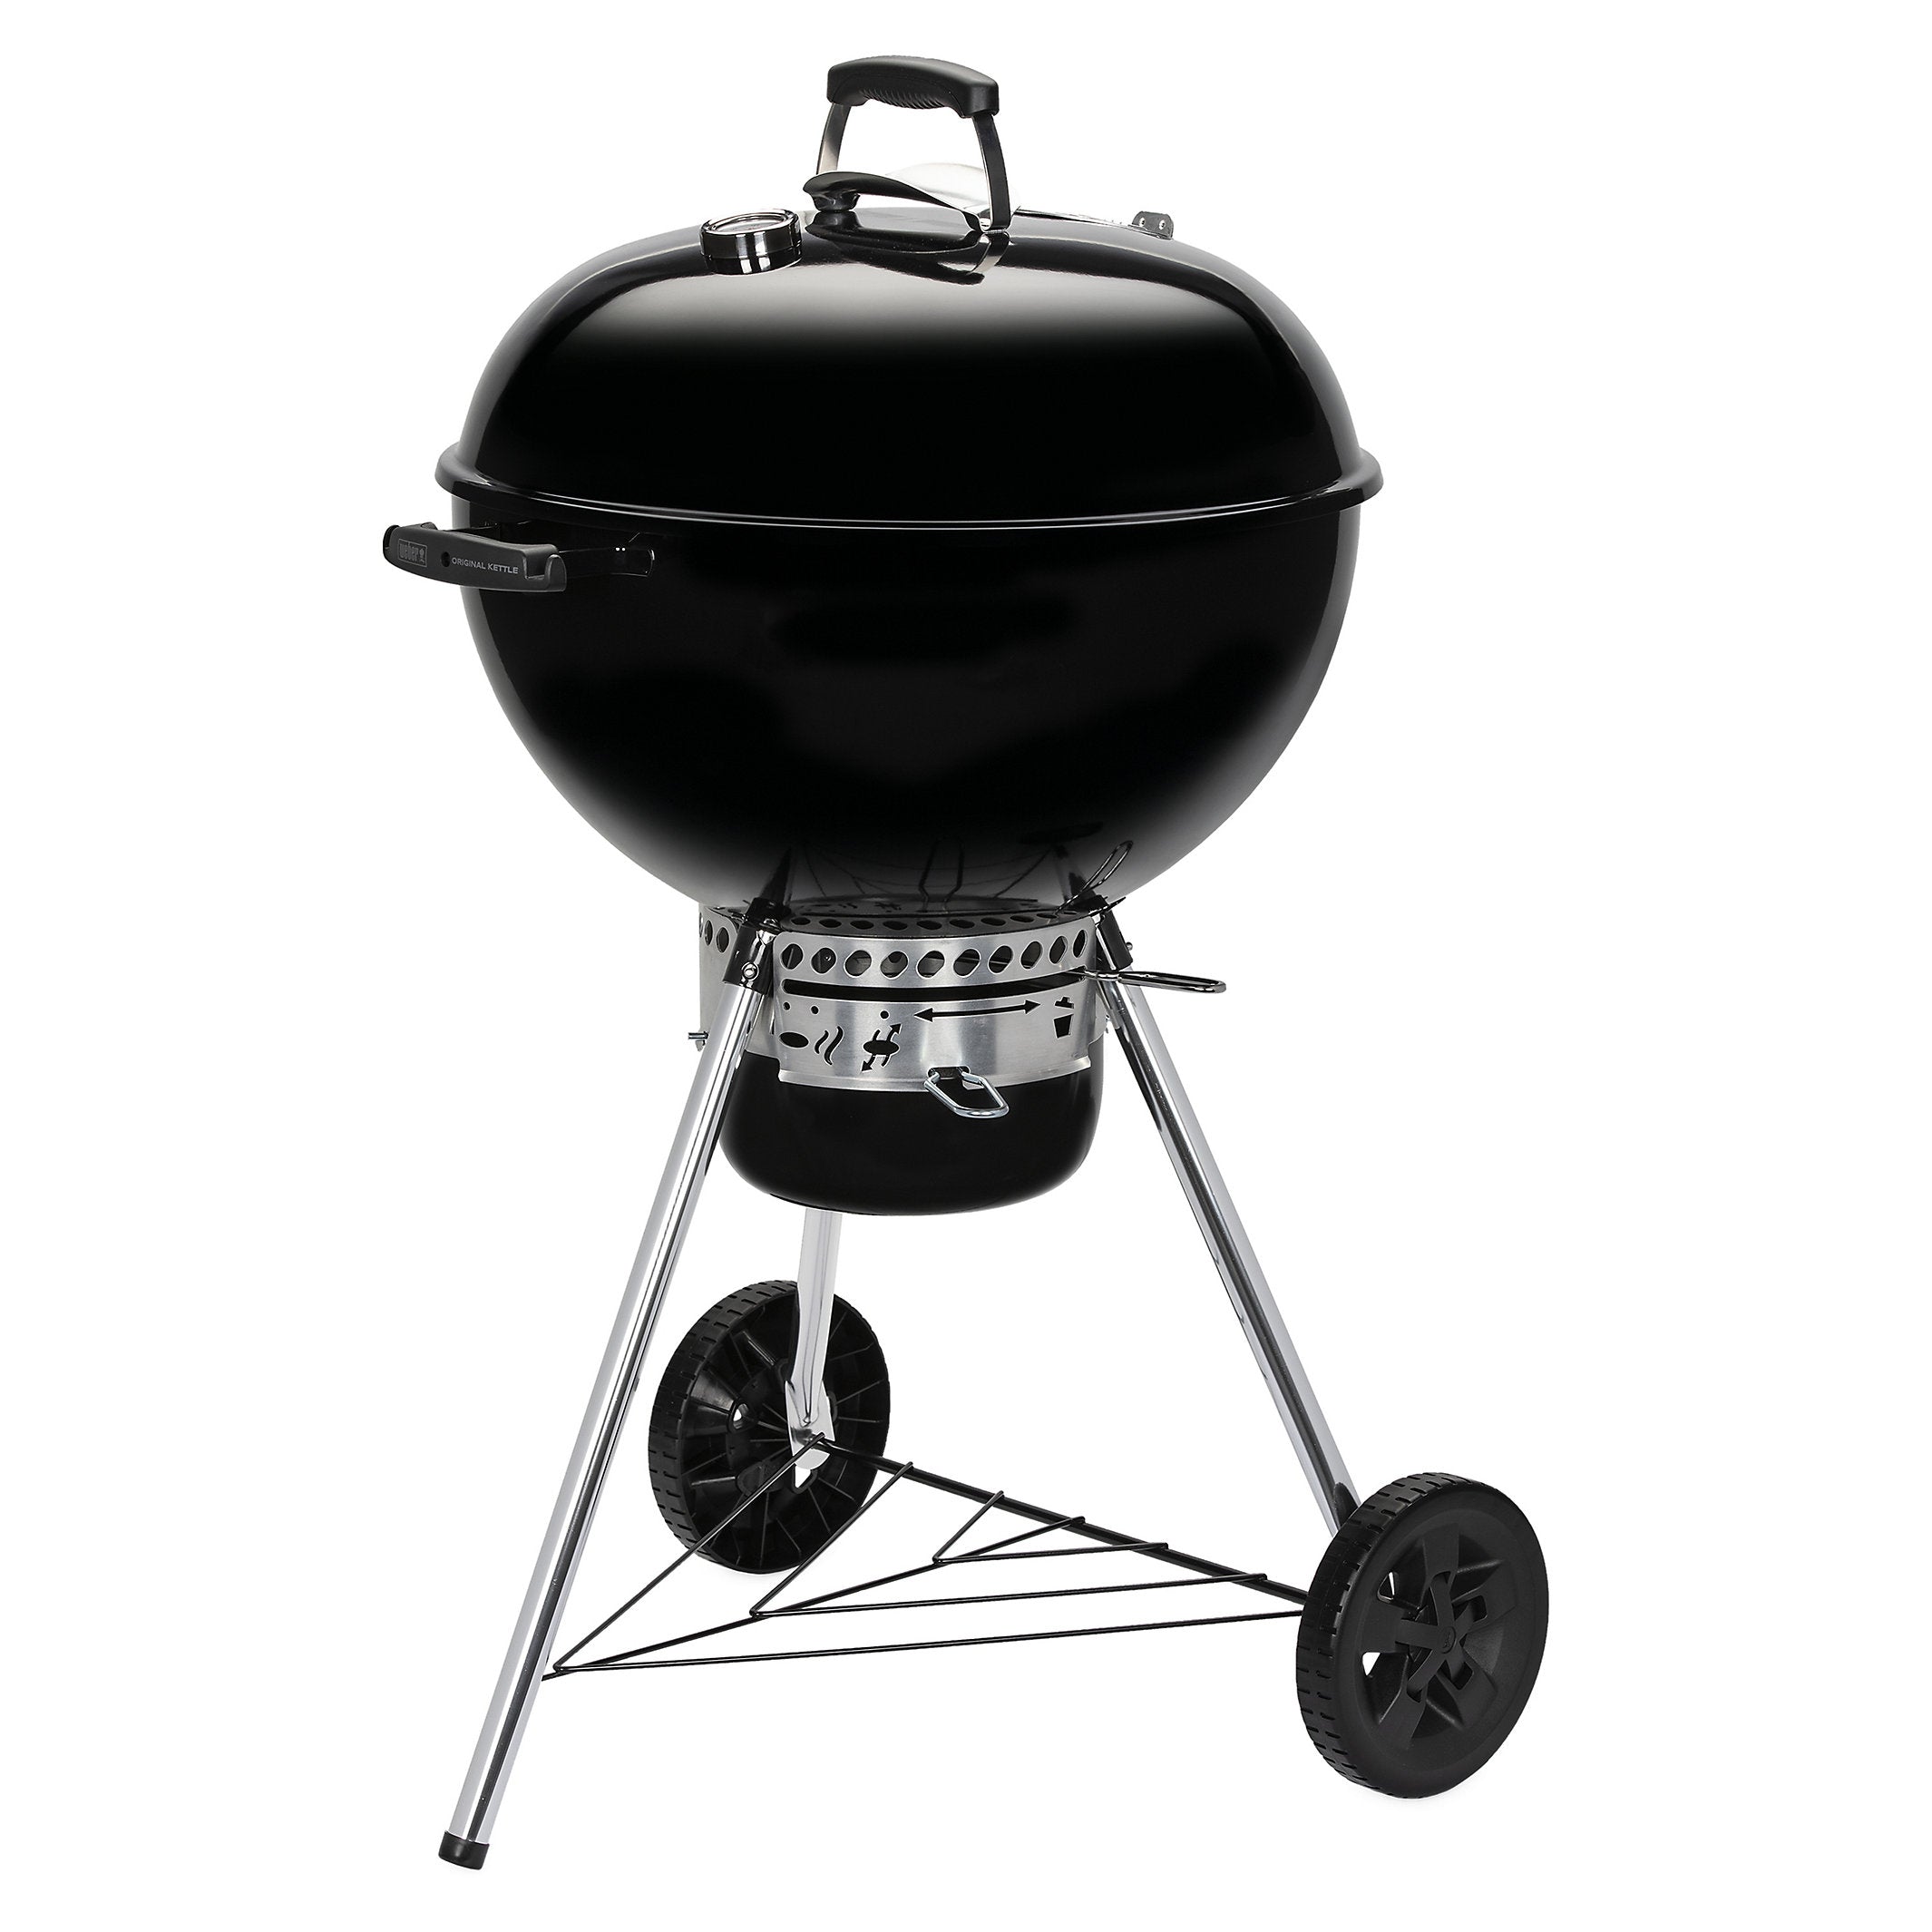 Weber Original E5730 Black Charcoal Barbecue 14201004, Trolley Grill 5413